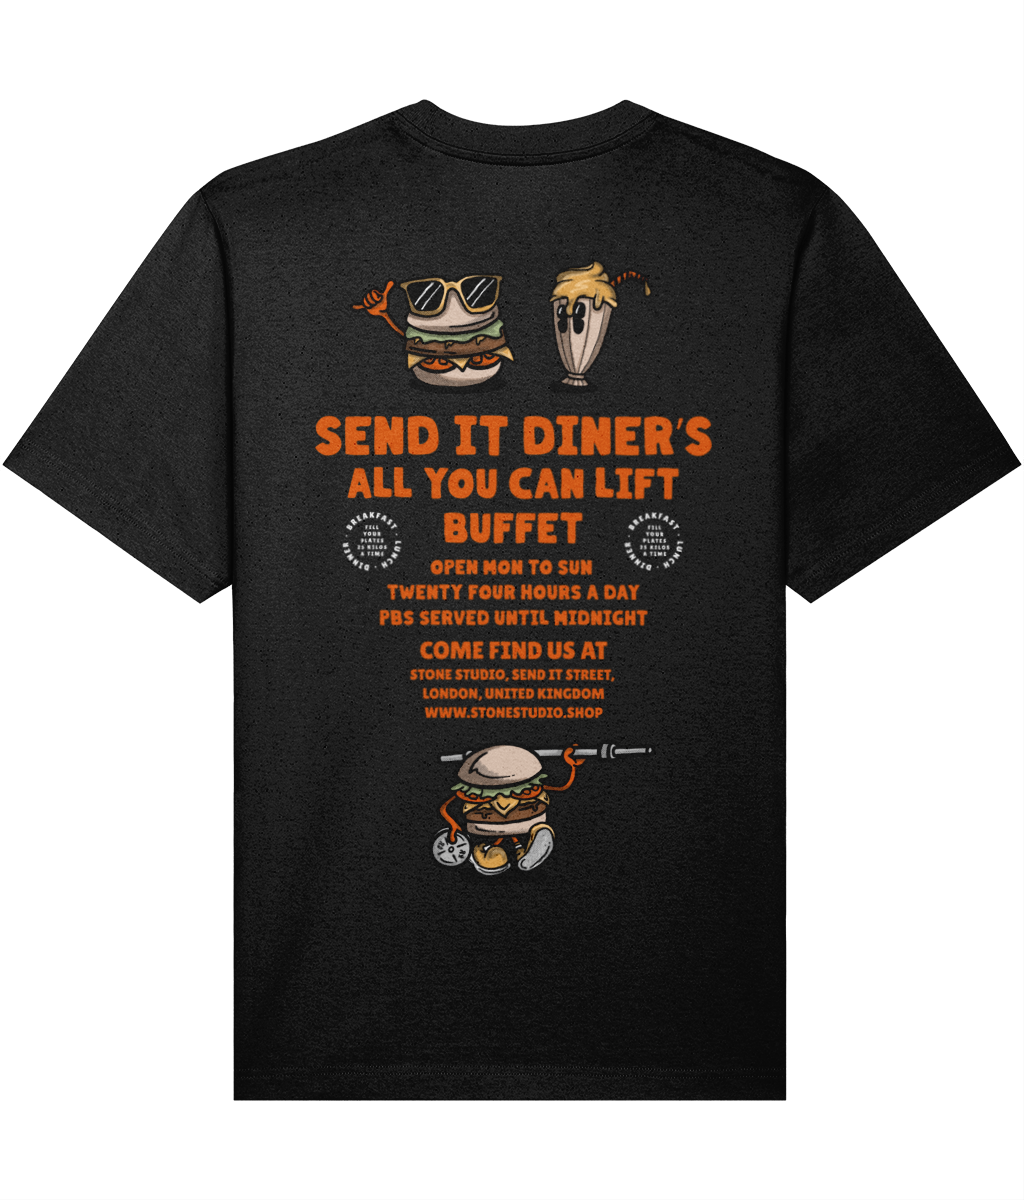 Send it diner oversized t-shirt